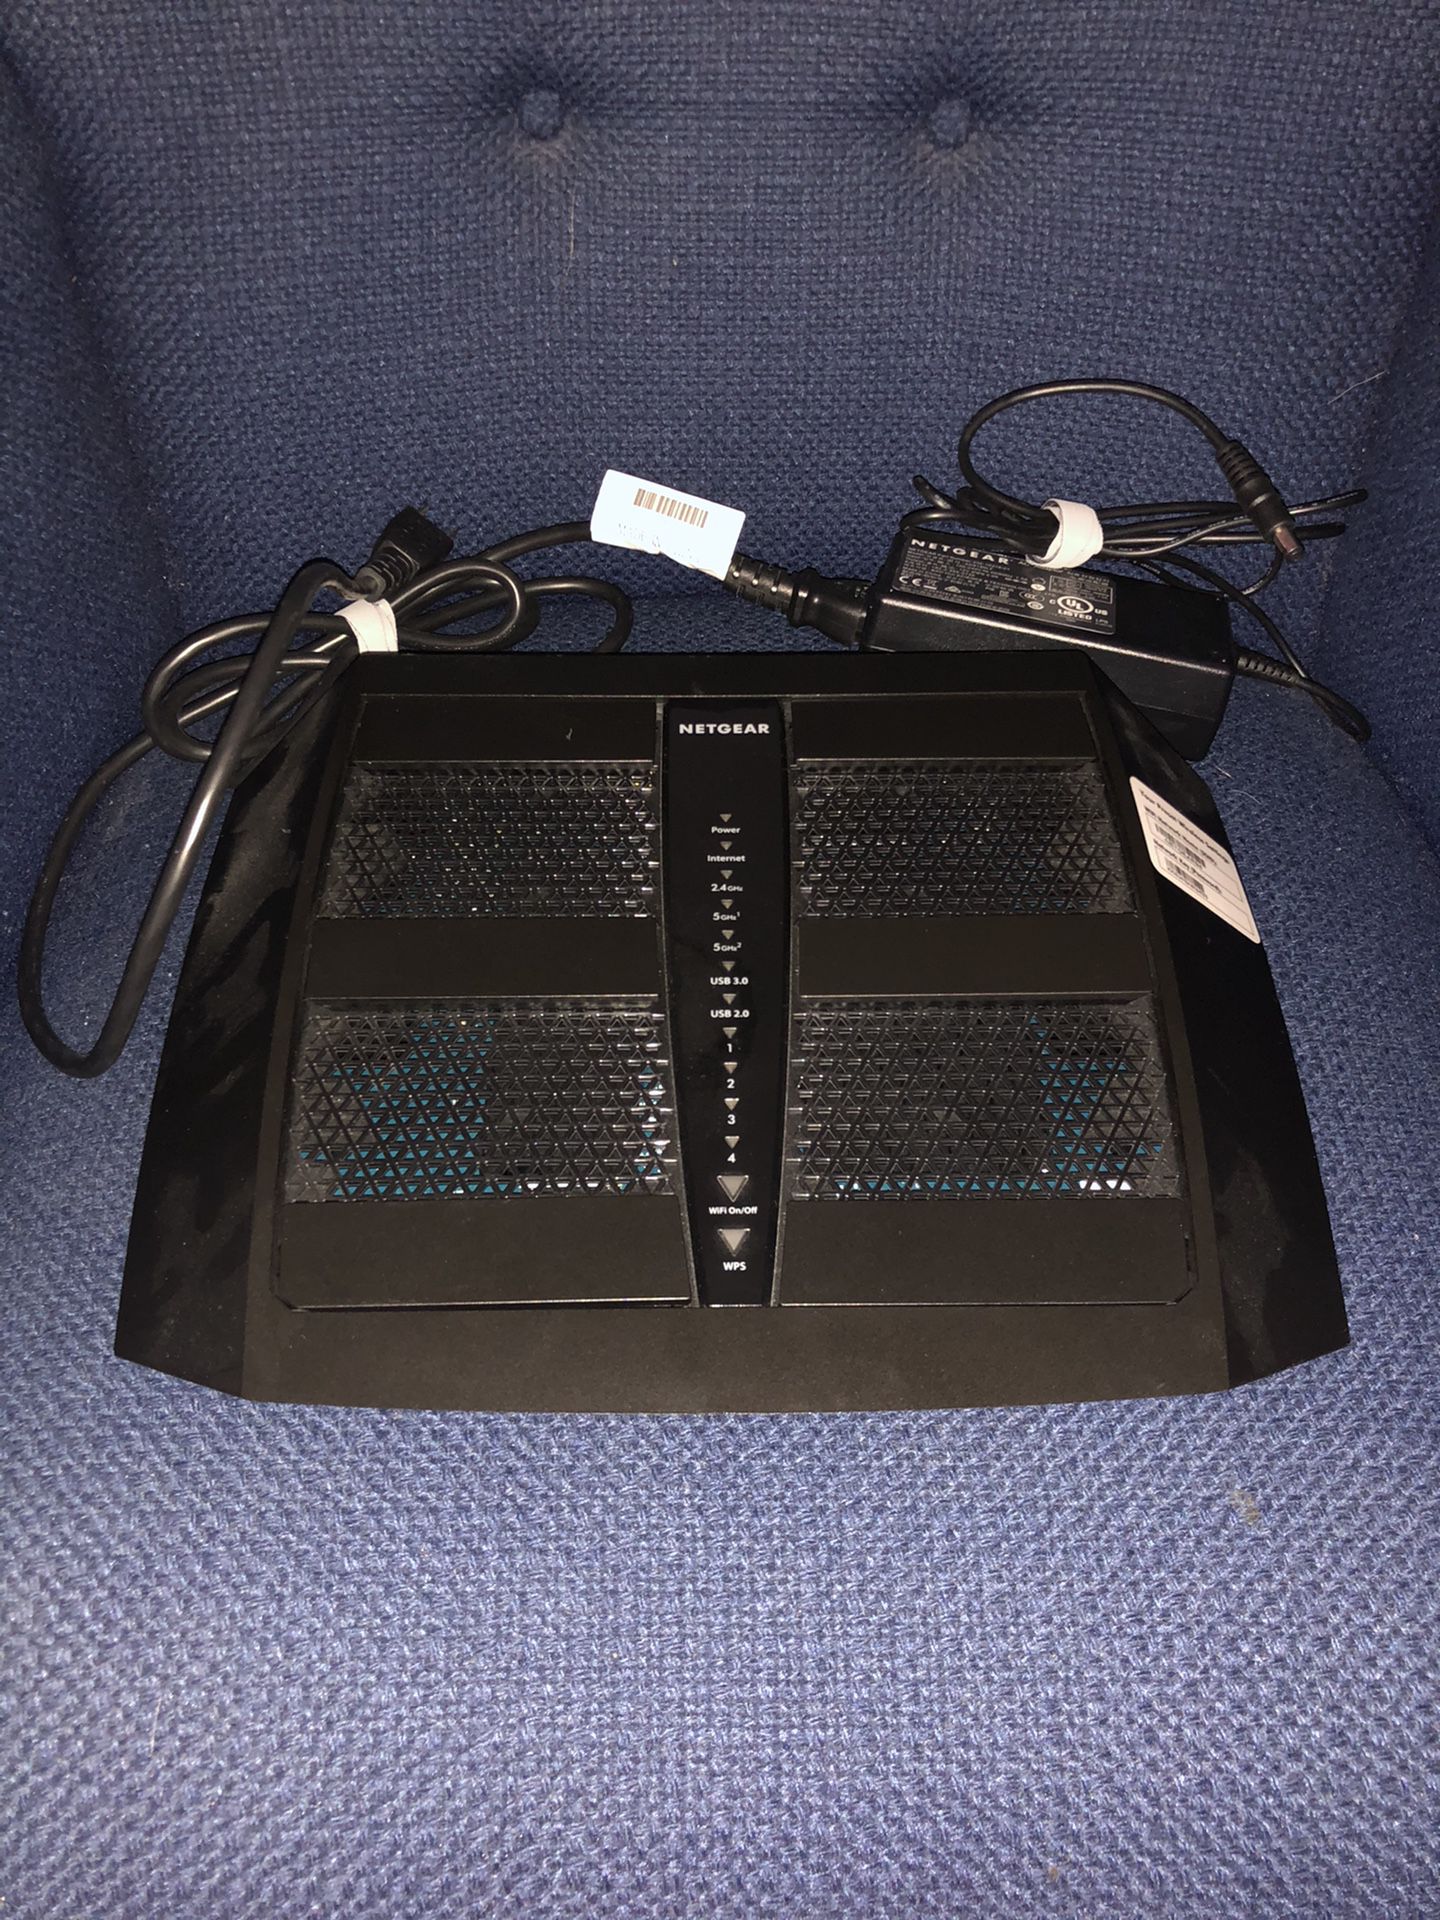 Netgear NightHawk X6 Wireless Router